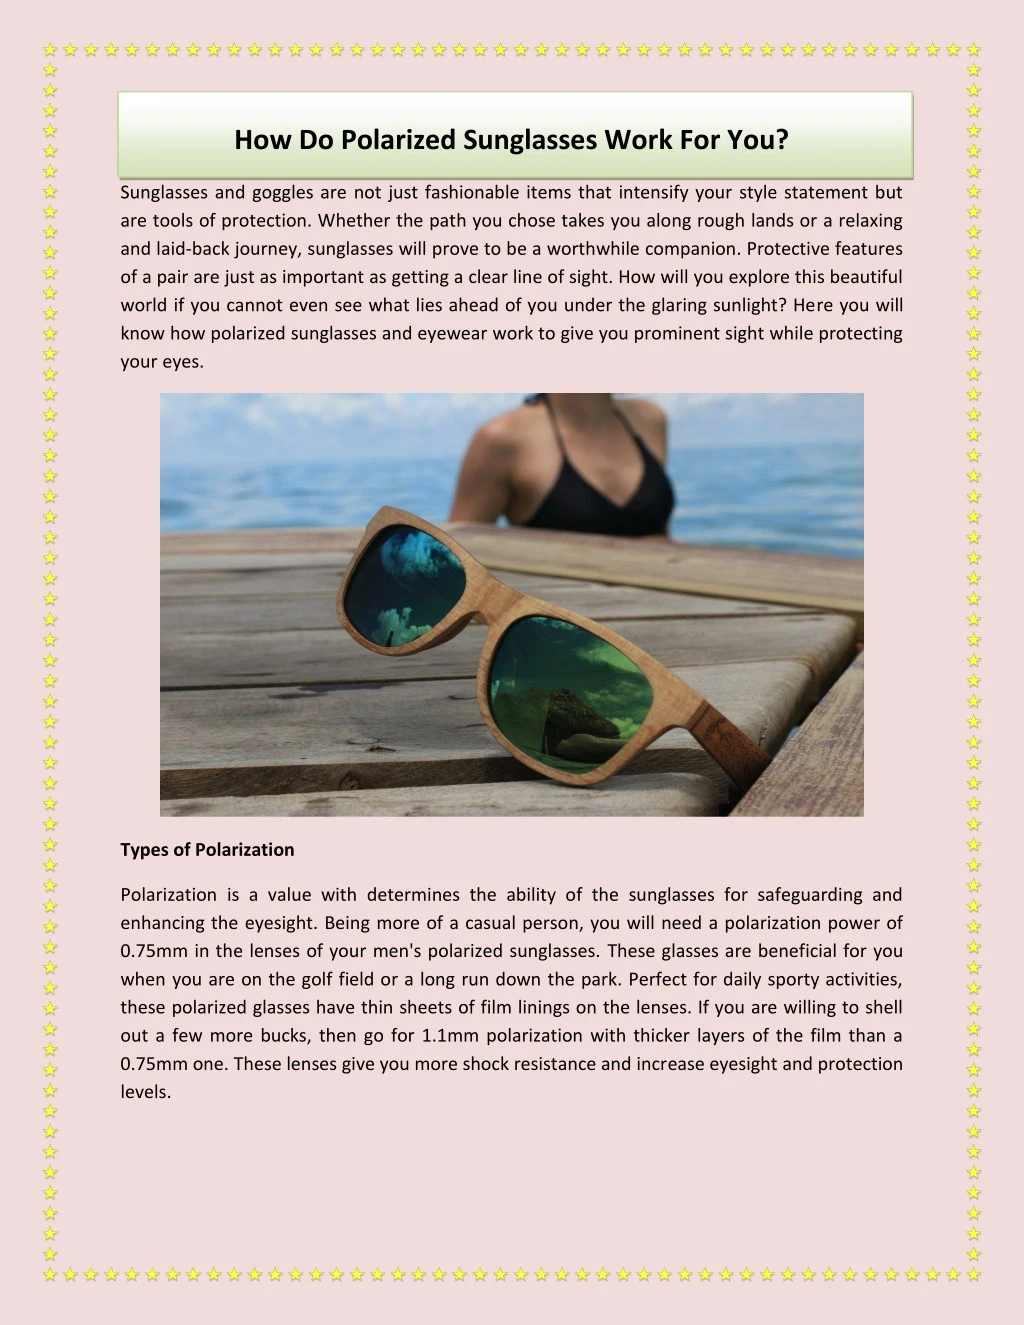 how do polarized sunglasses work for you